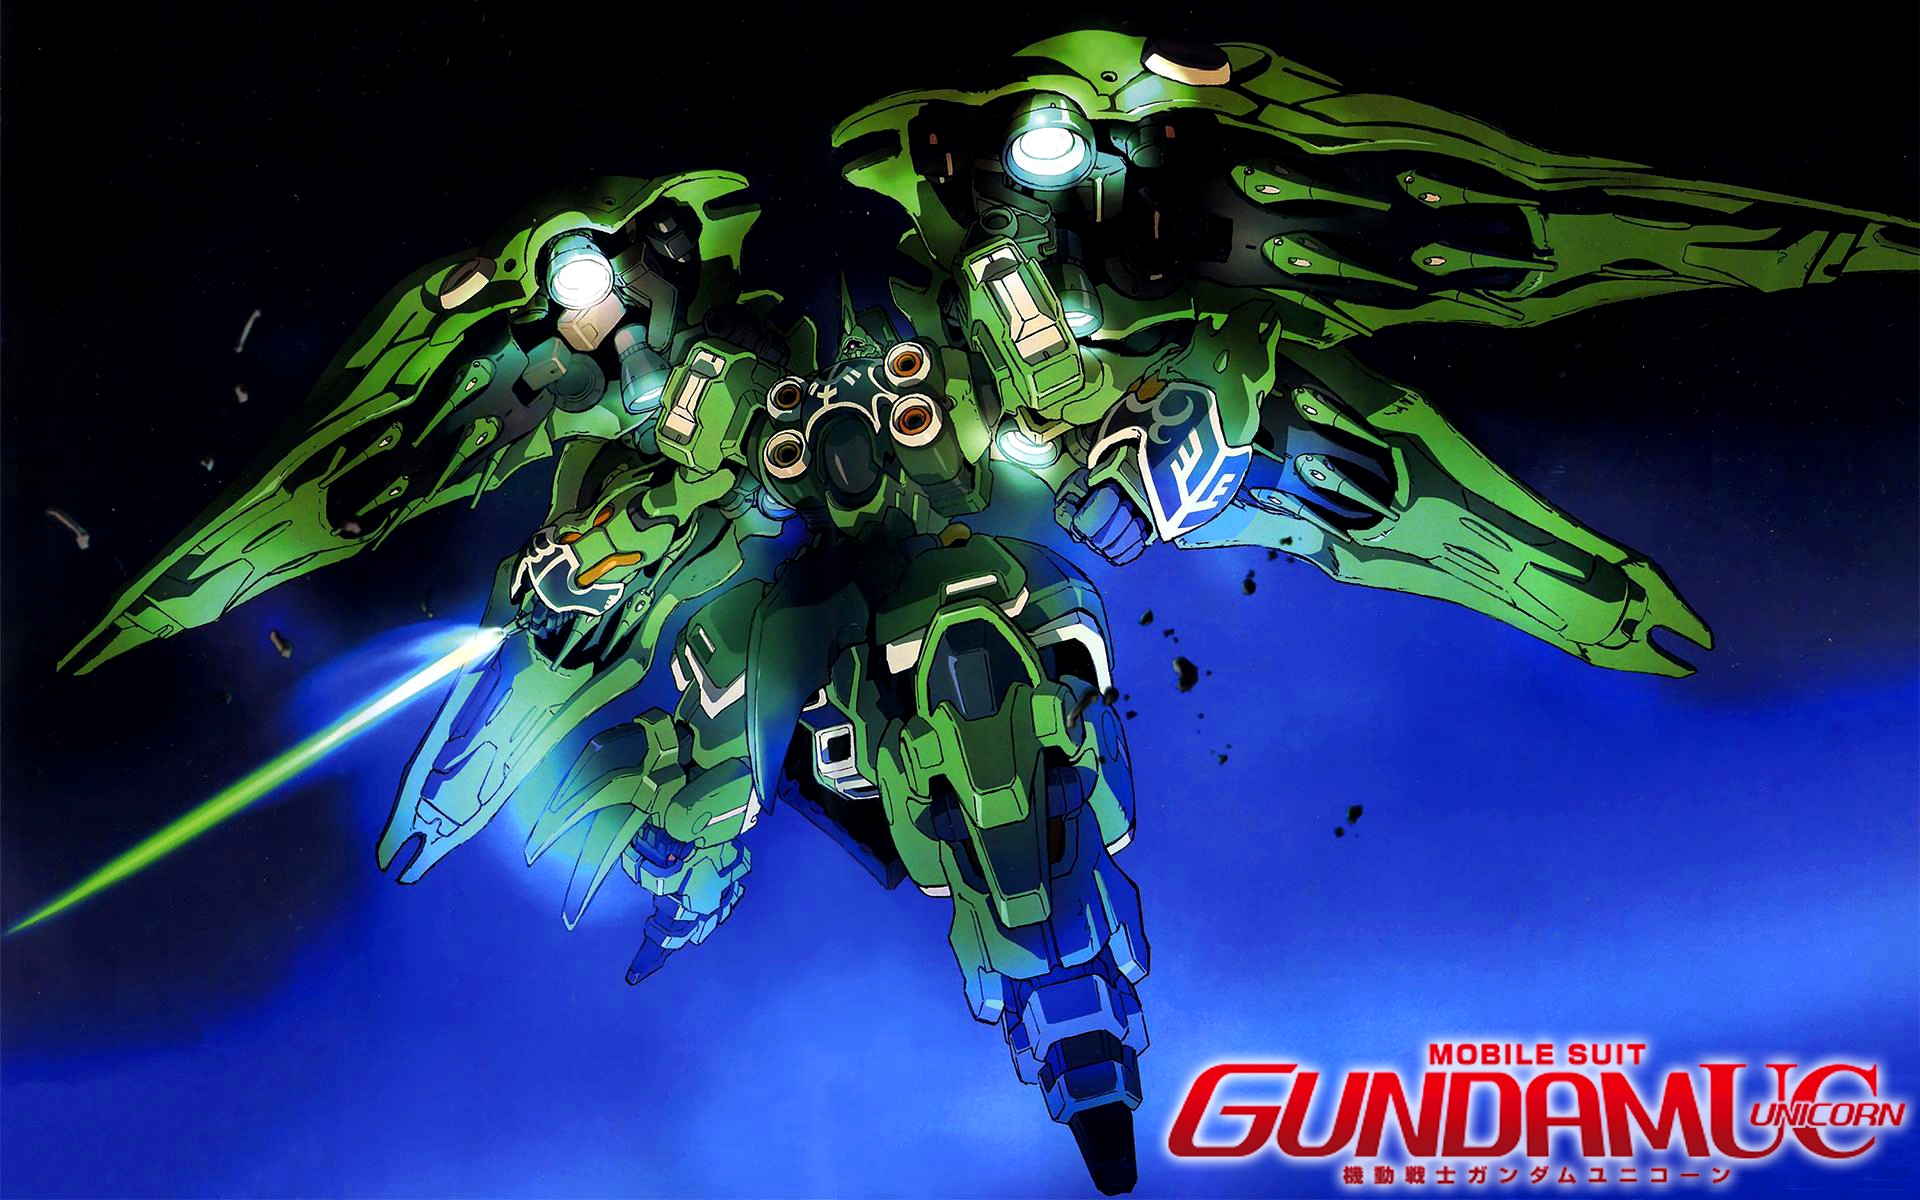 Gundam Res: 1920x1200 / Size:940kb. Views: 38992